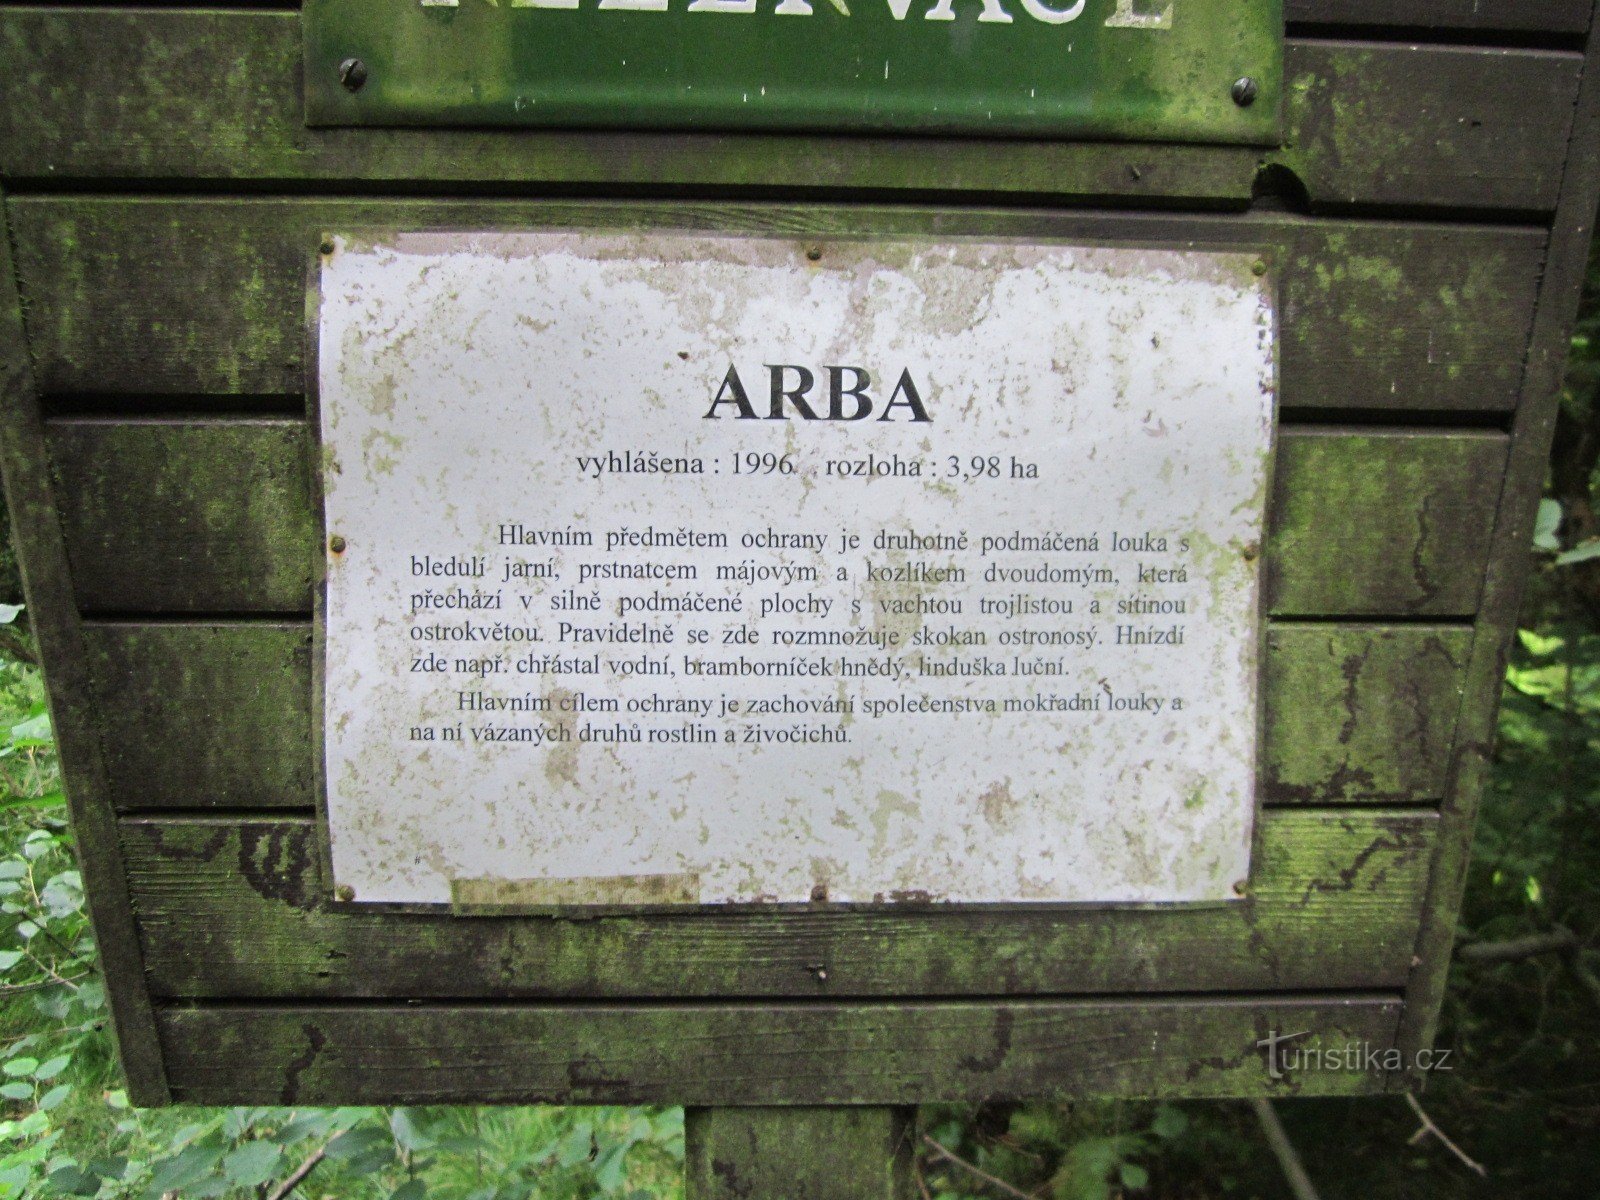 Arba reservation information sign